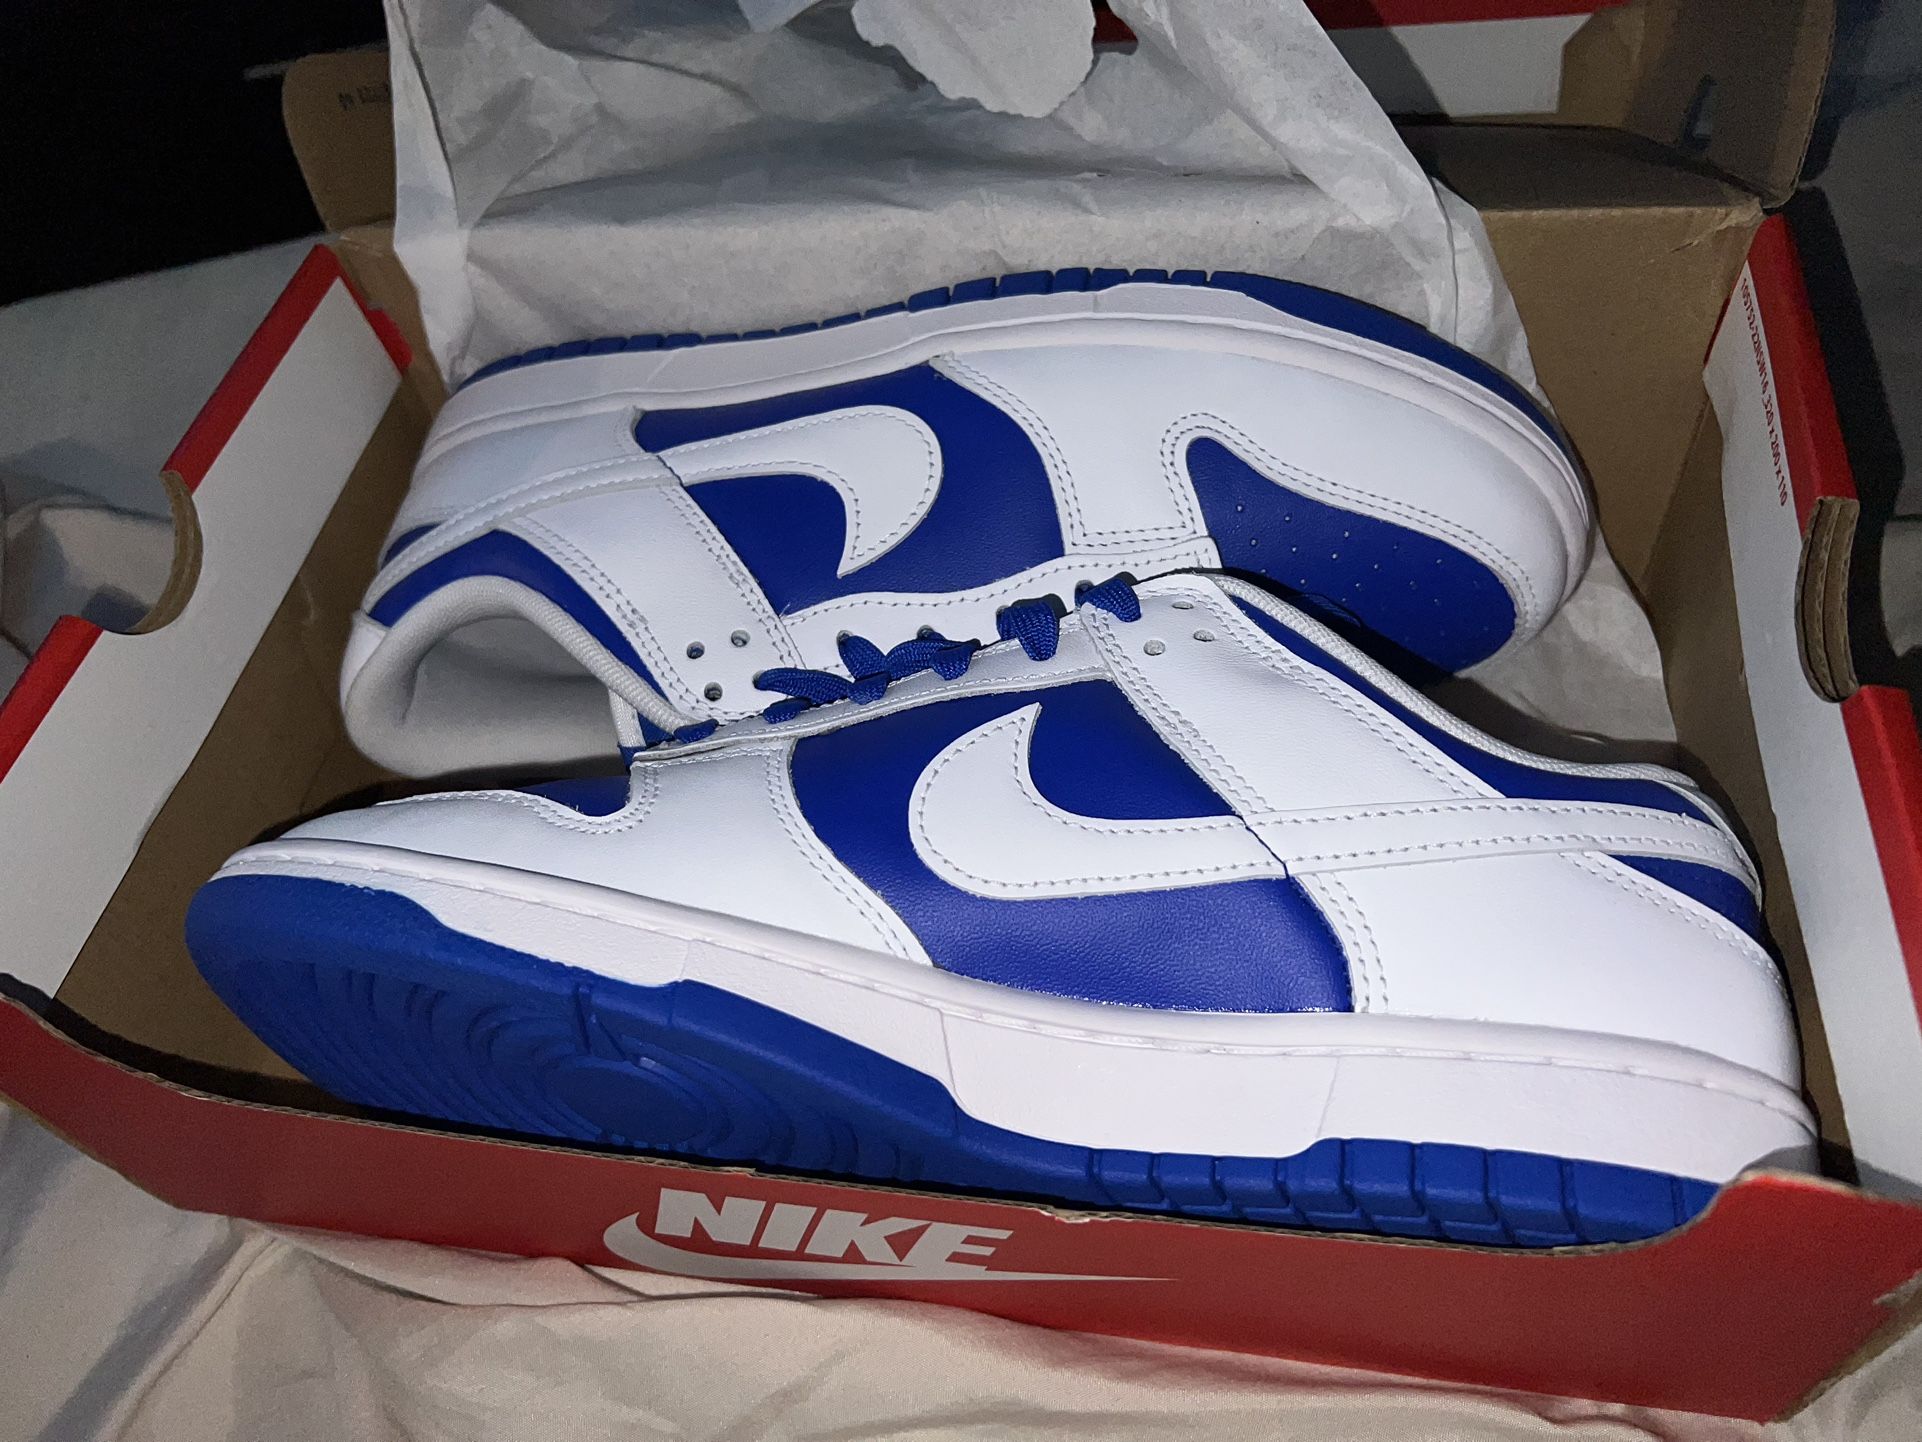 Nike Dunk Blue/white Size 9